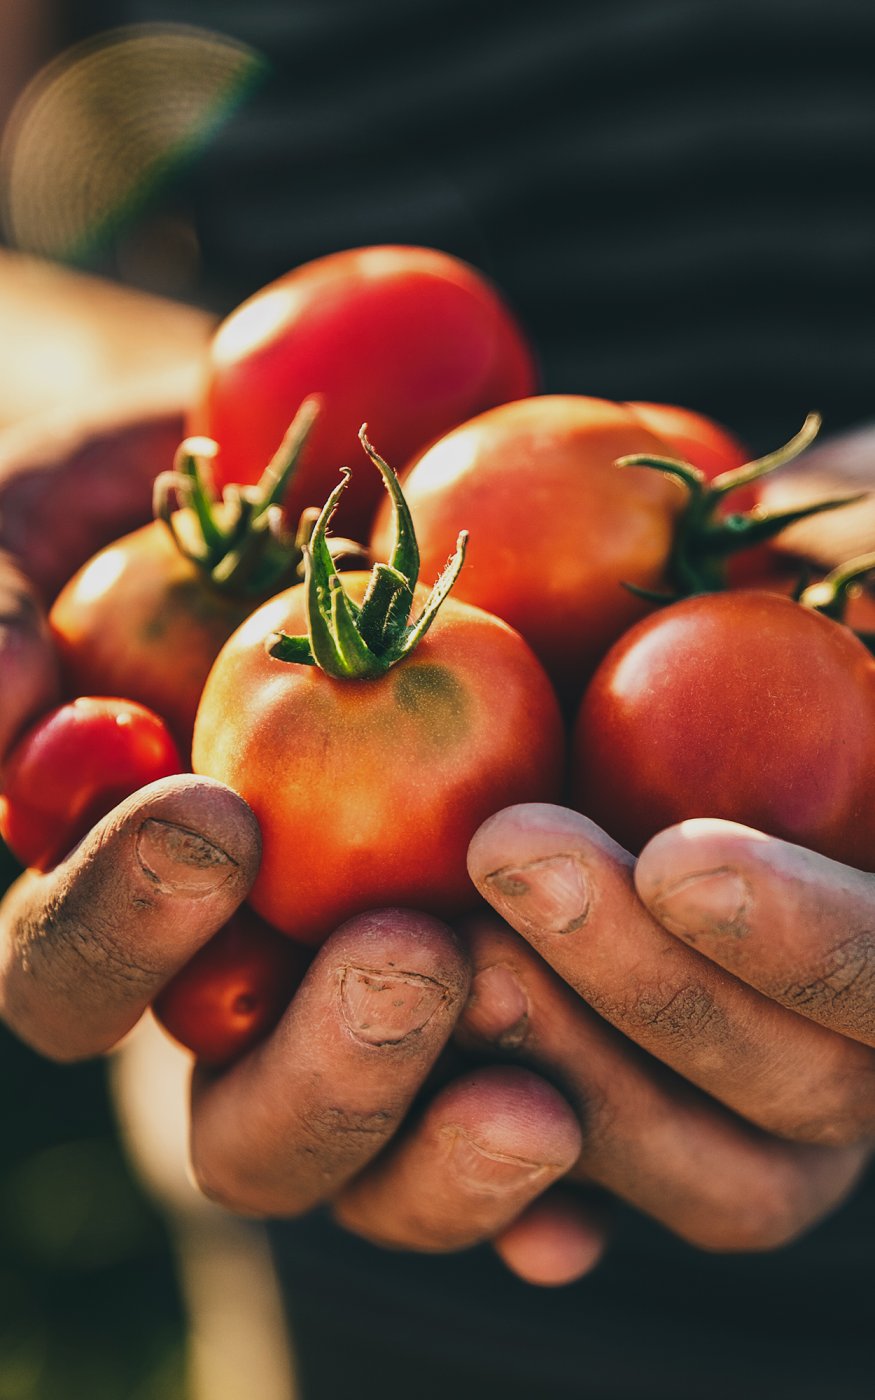 Freshly picked tomatoes being cradled in soiled hands